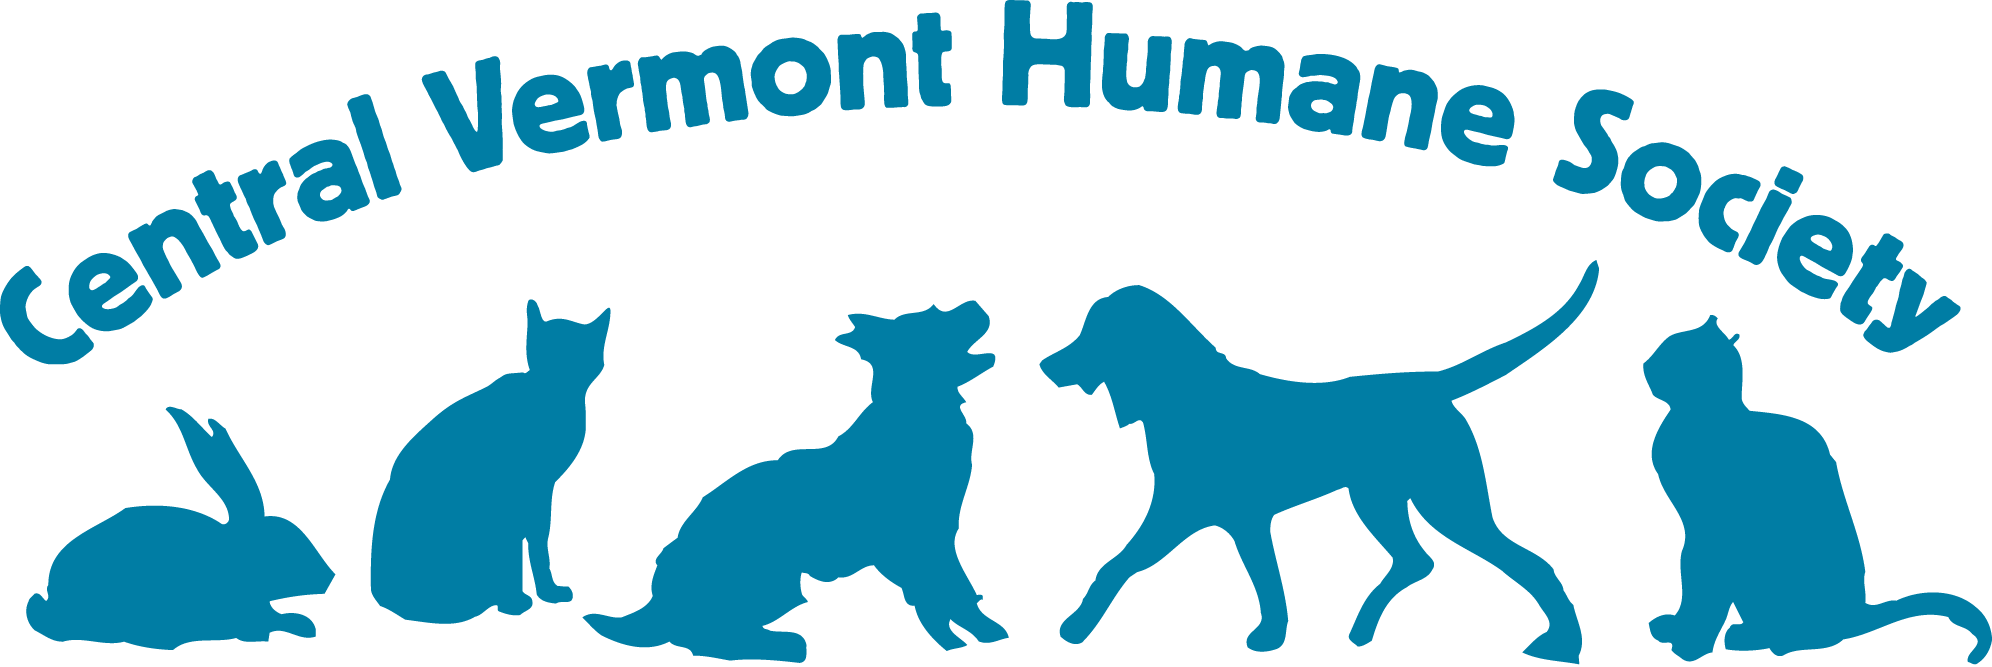 CVHS - Central Vermont Humane Society